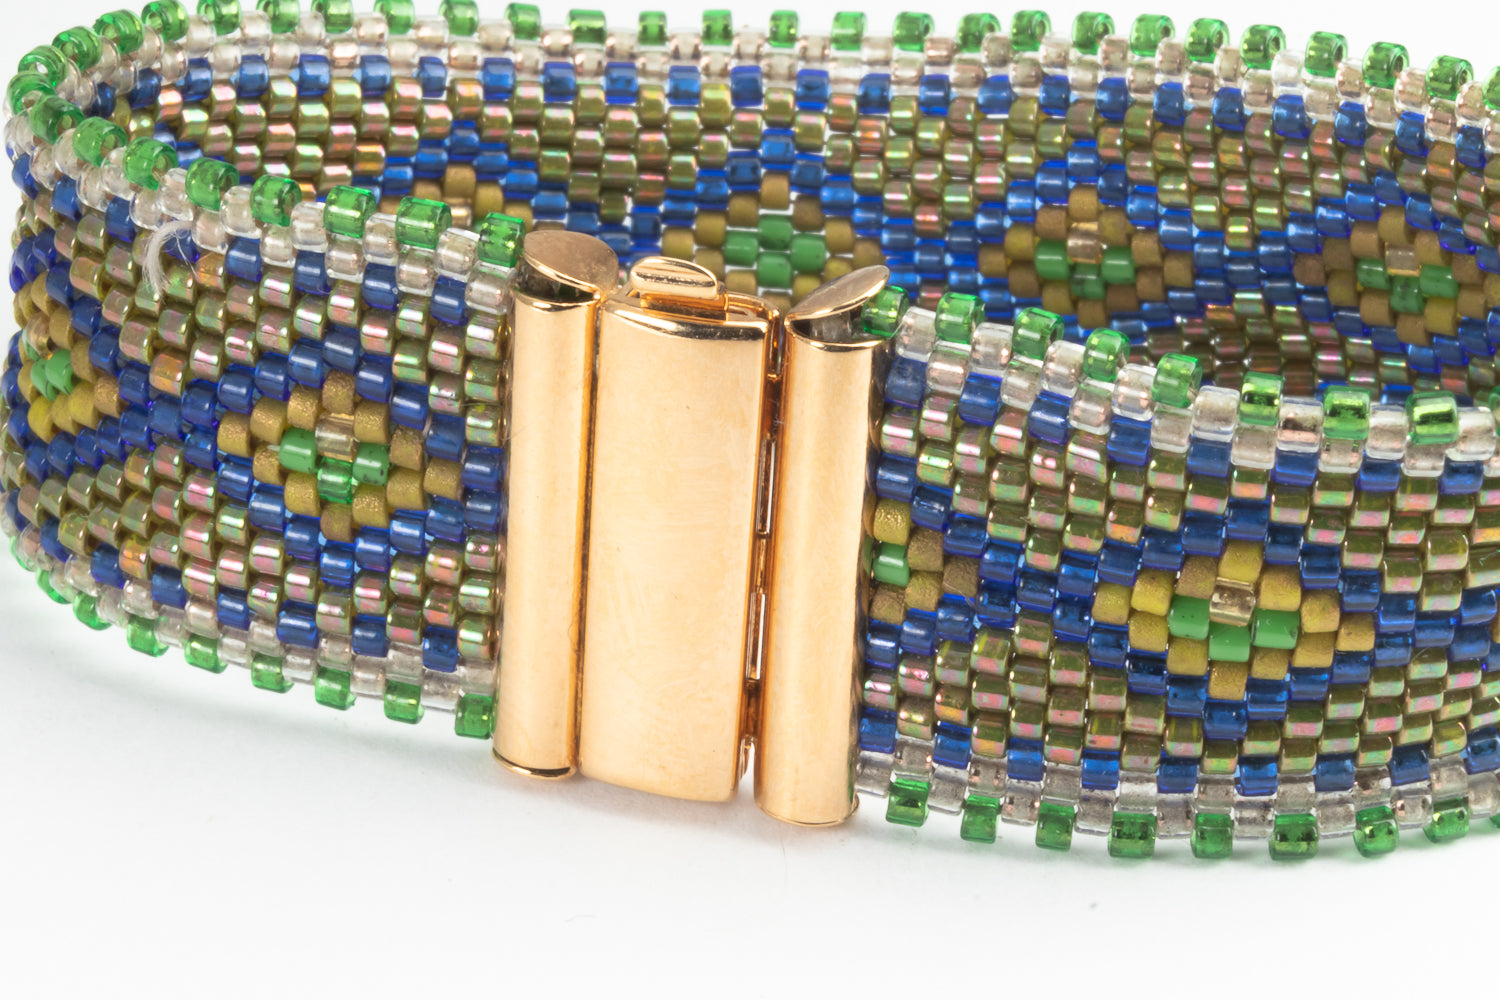 Isabella Bead Loom Bracelet Pattern - Megan's Beaded Designs